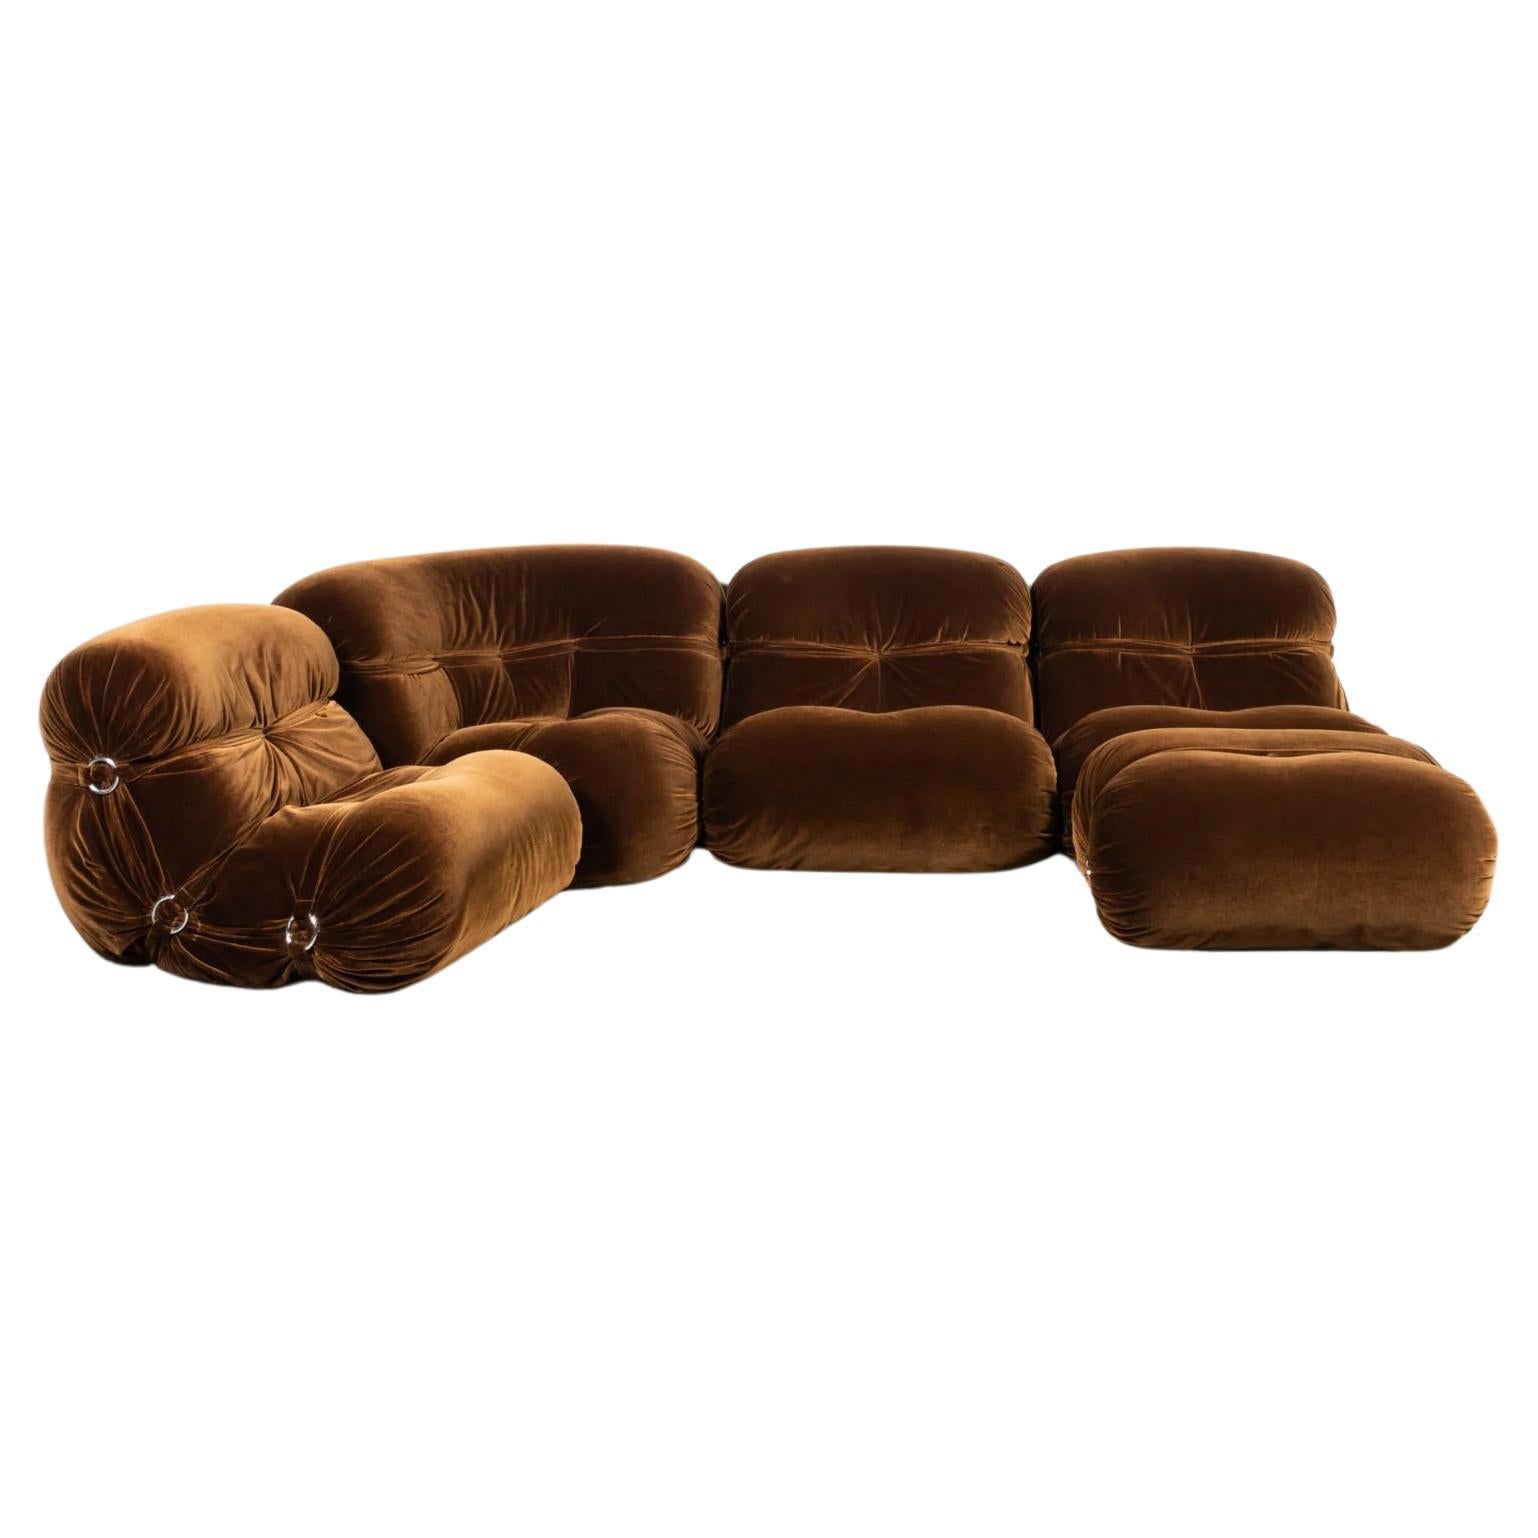 1970s 5 piece Modular Sofa in Original Chocolate Brown Velvet For Sale